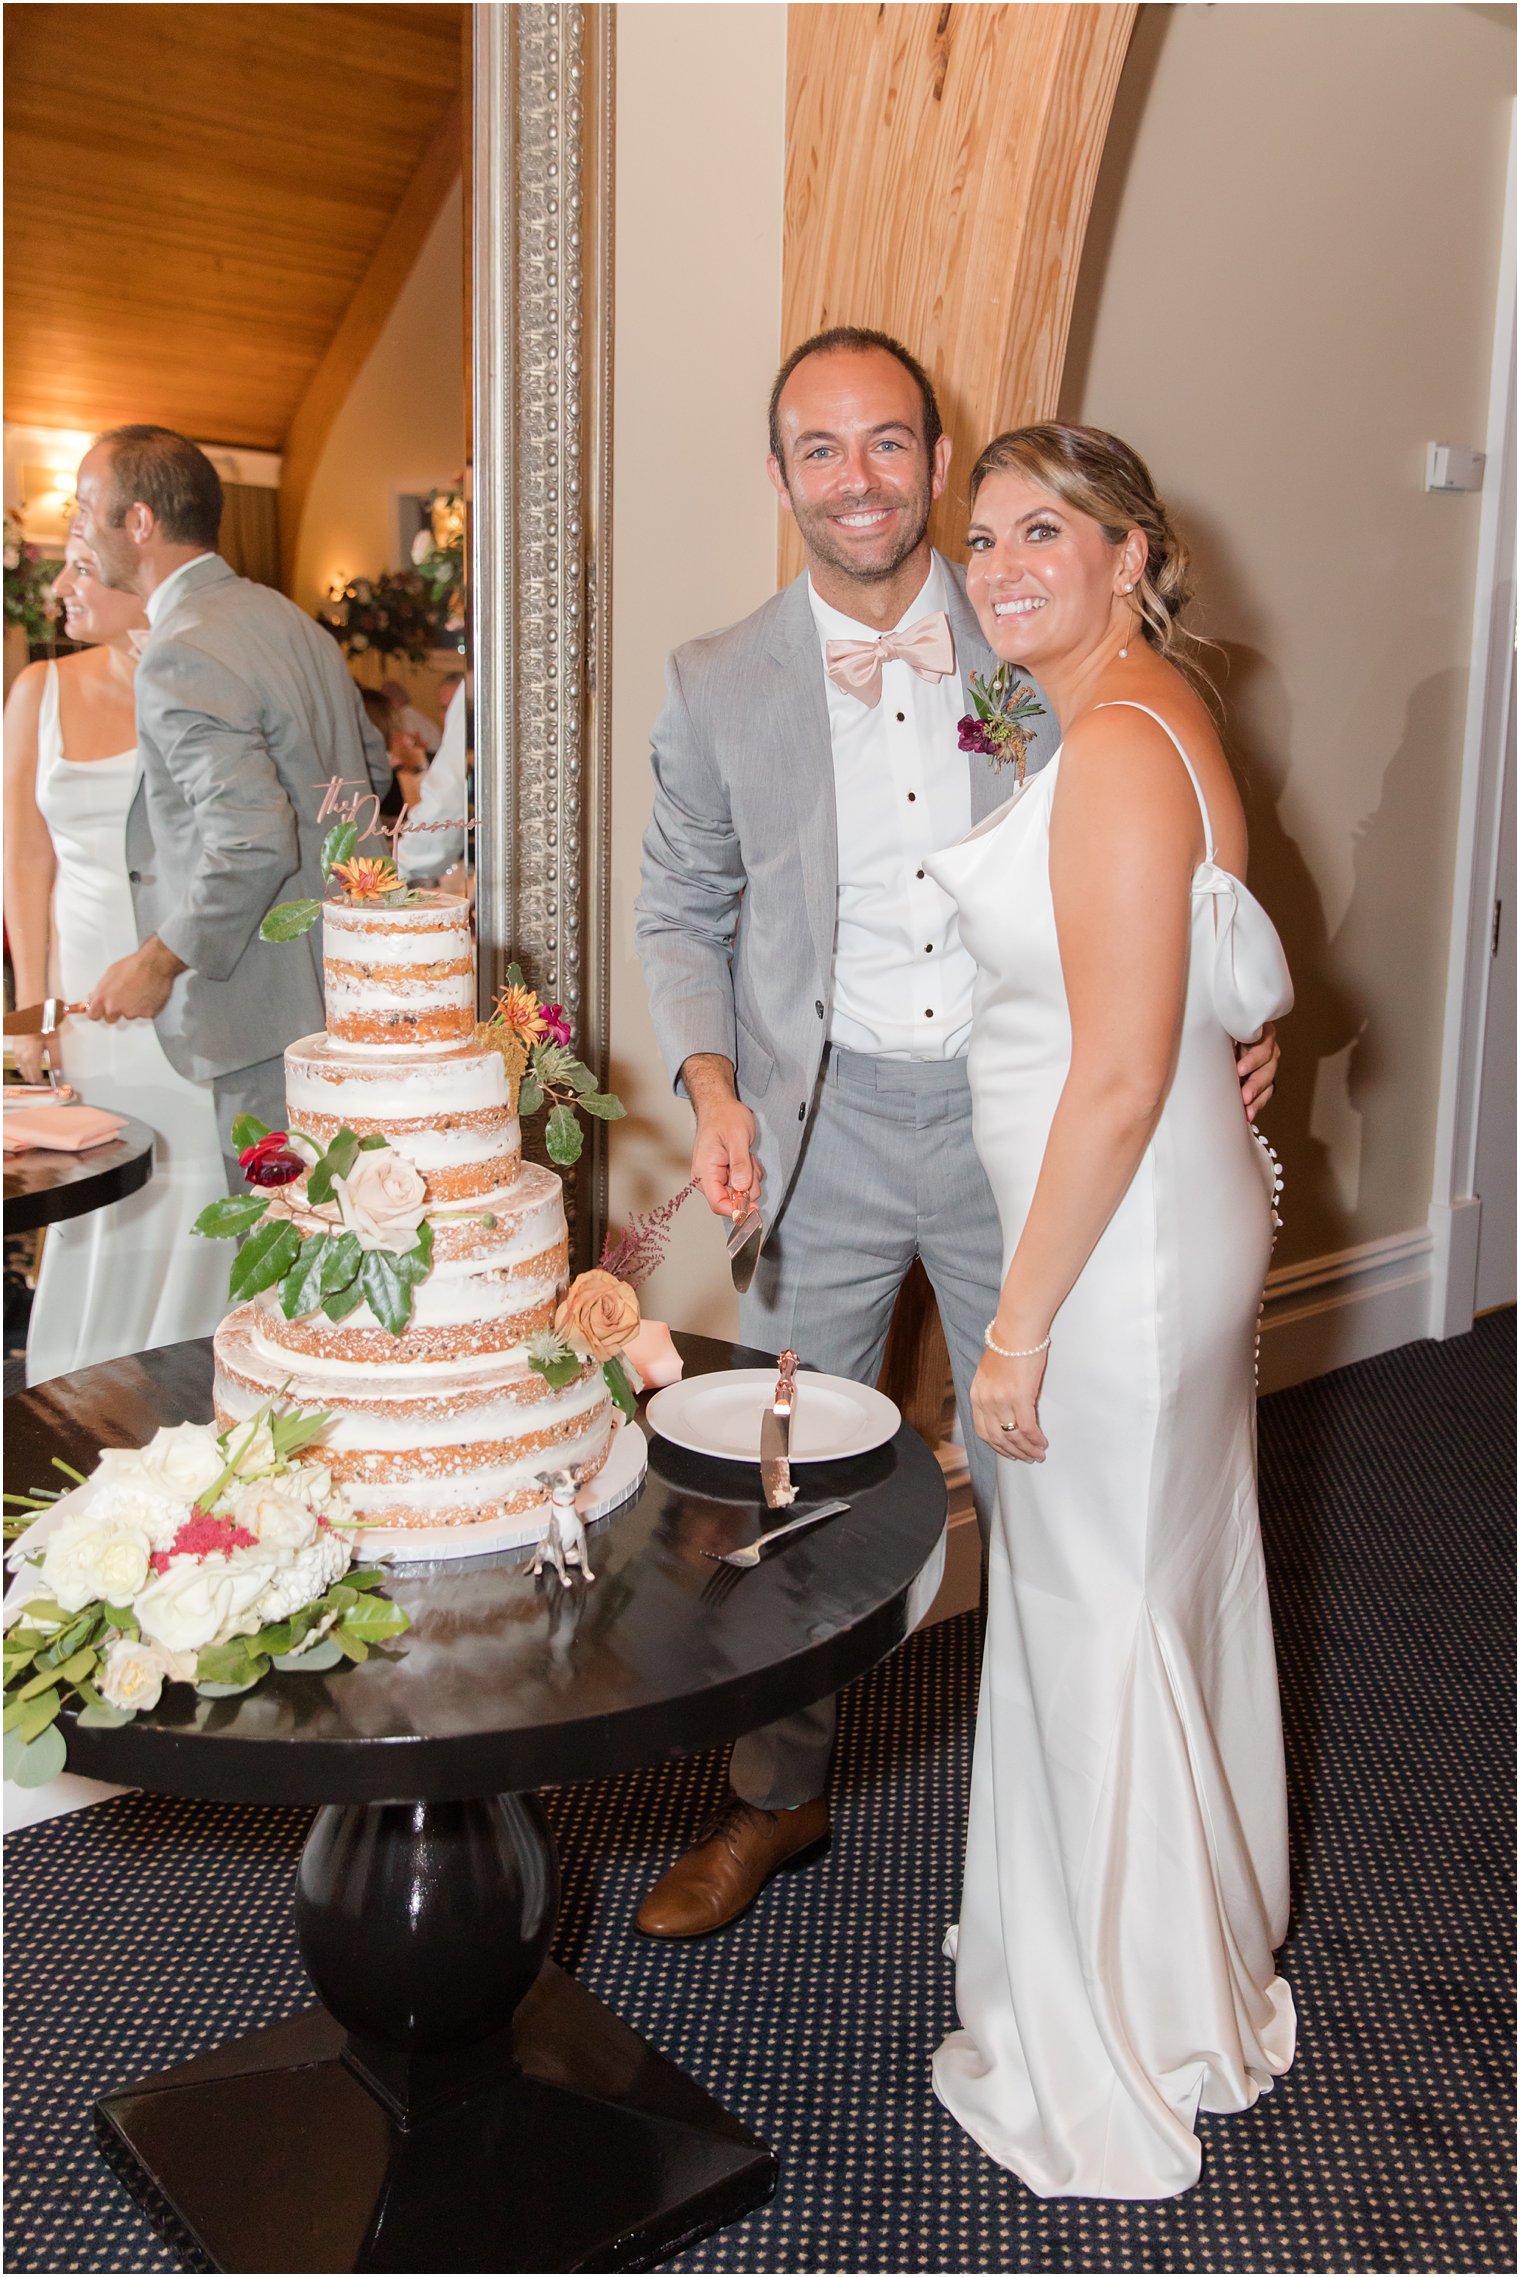 couple cuts wedding cake during Manahawkin NJ wedding reception 